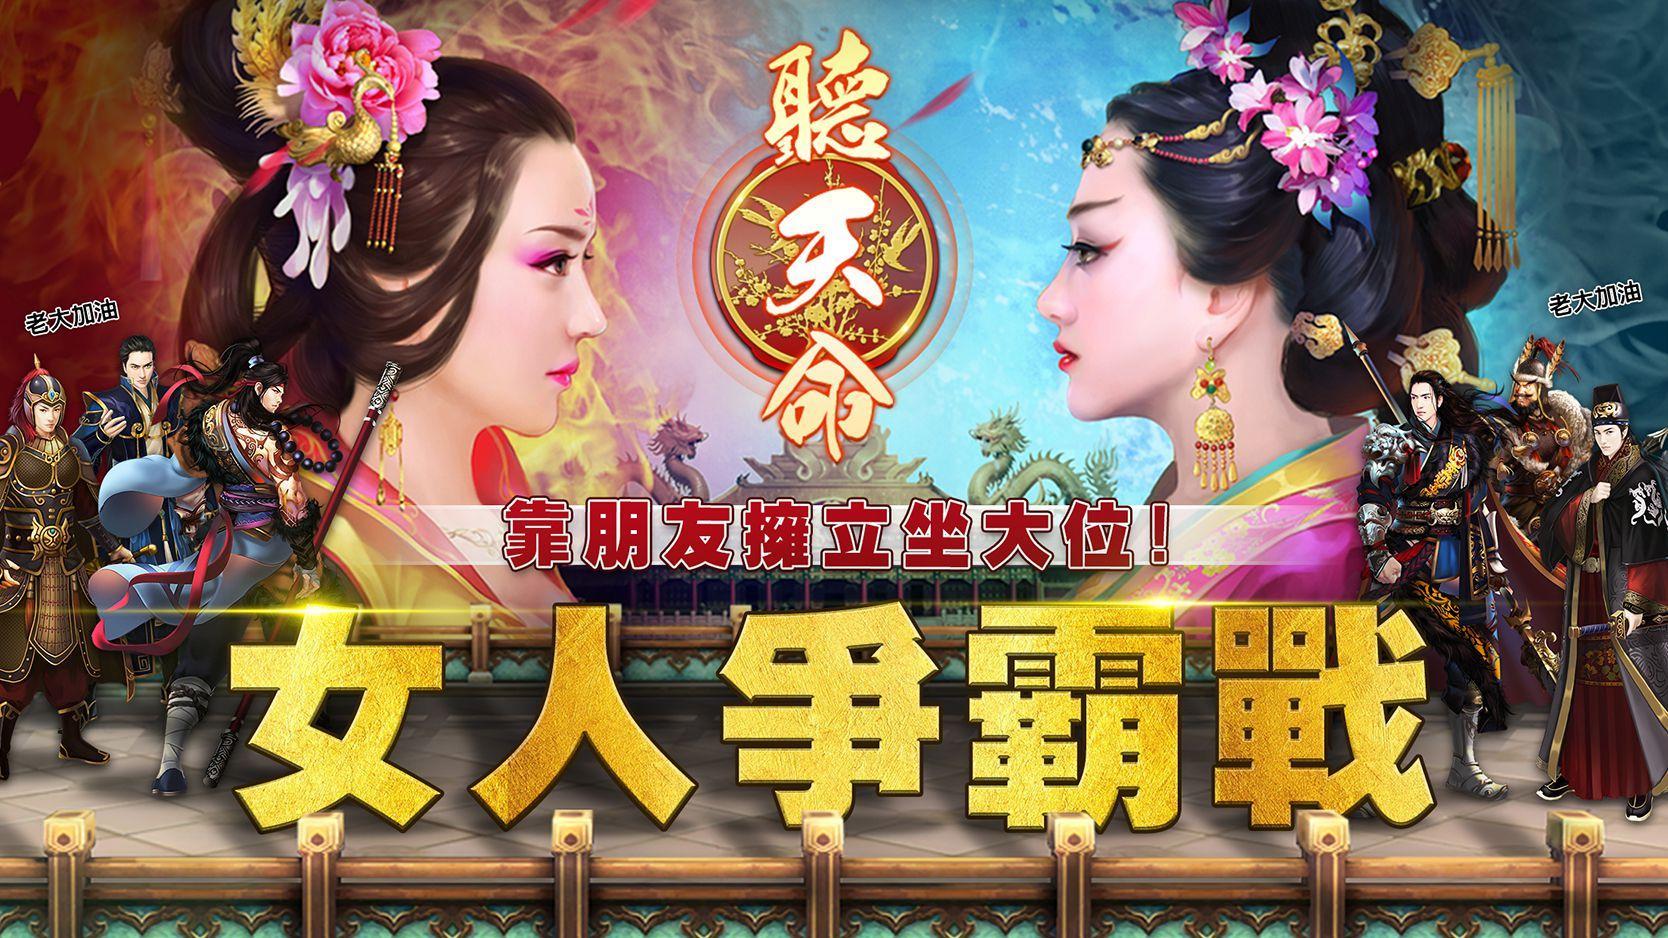 Screenshot 1 of La leyenda de la concubina Xi: la primera novela jugable de Gongdou 1.2.1